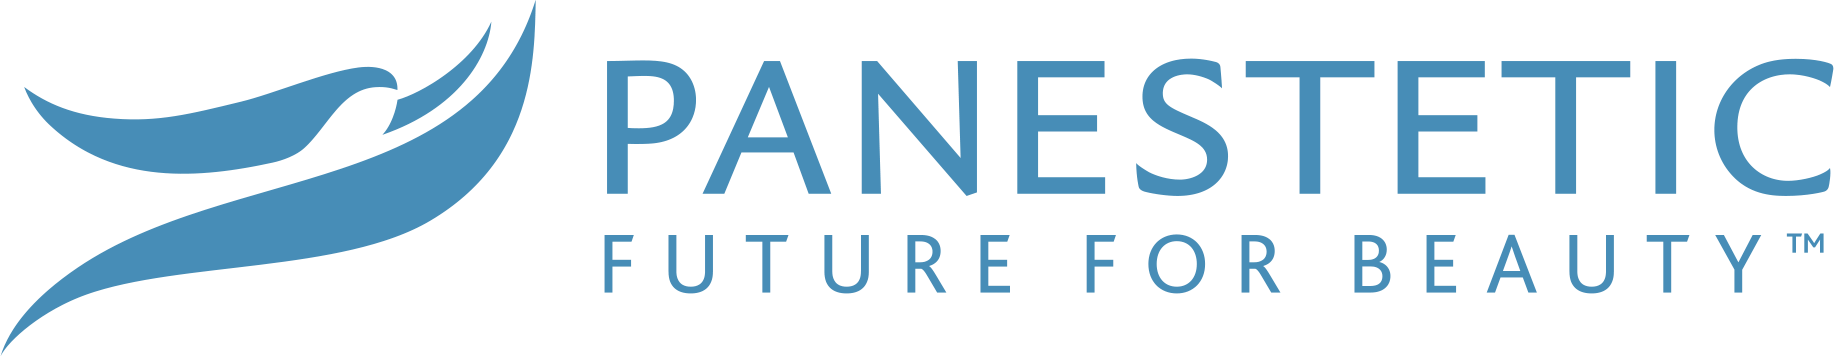 Panestetic logo